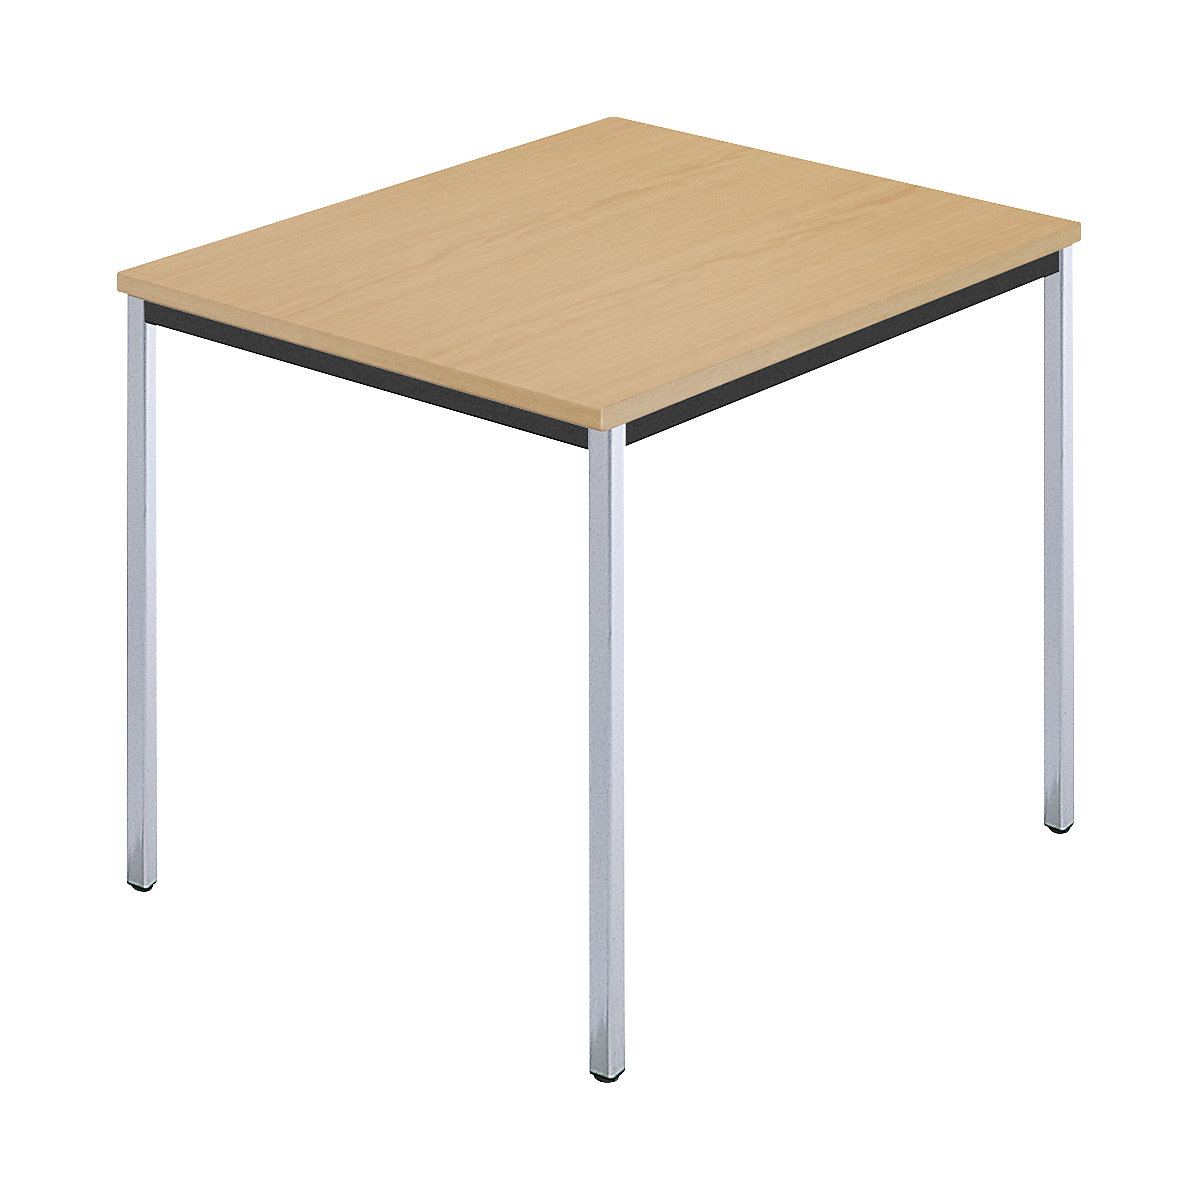 Pravokutni stol, kromirana četverokutna cijev, ŠxD 800 x 800 mm, prirodna bukva-6